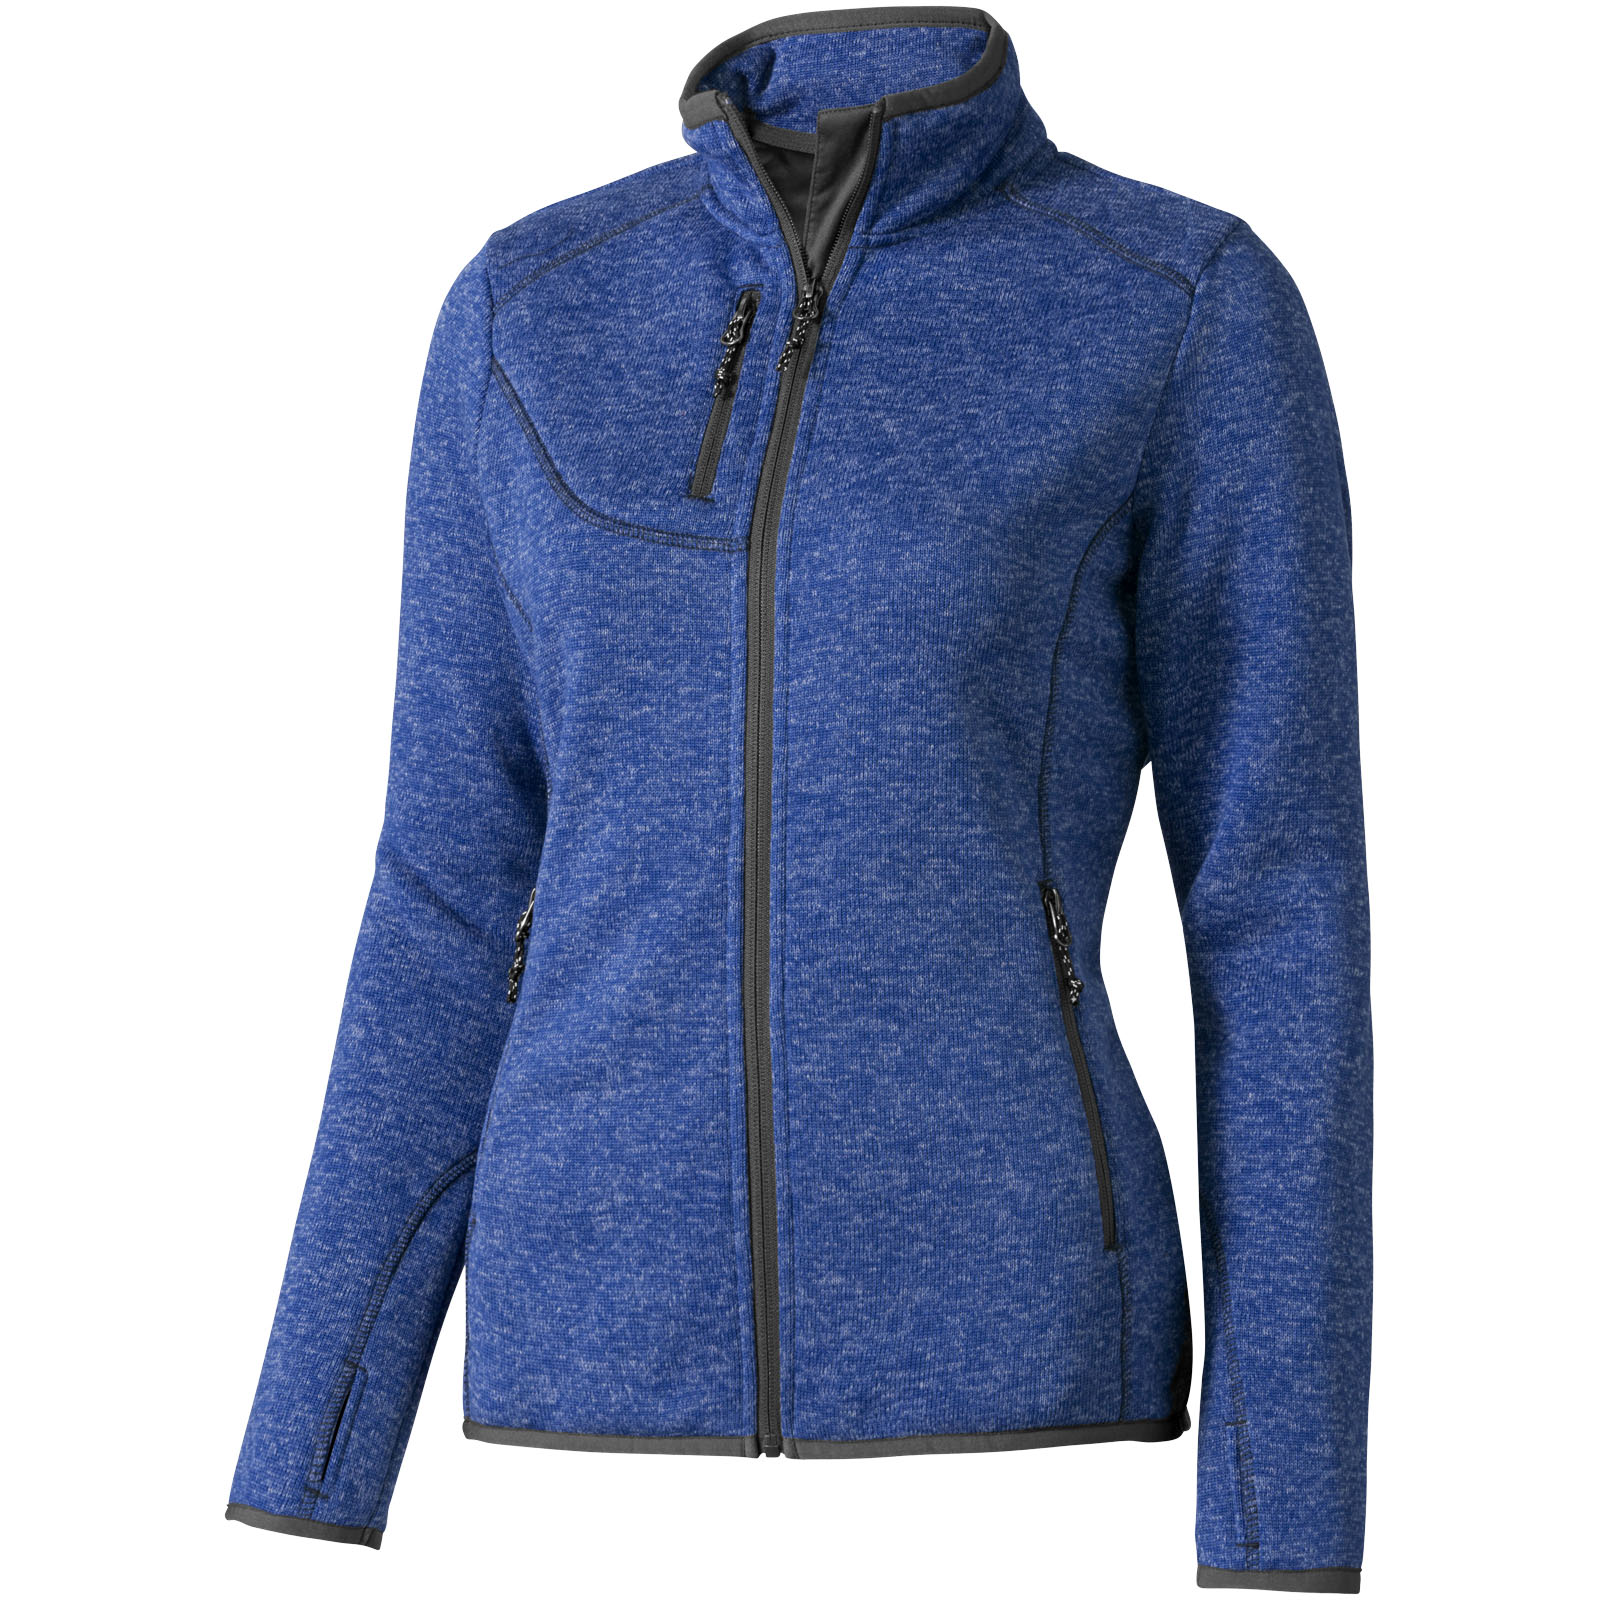 Jackets - Tremblant women's knit jacket